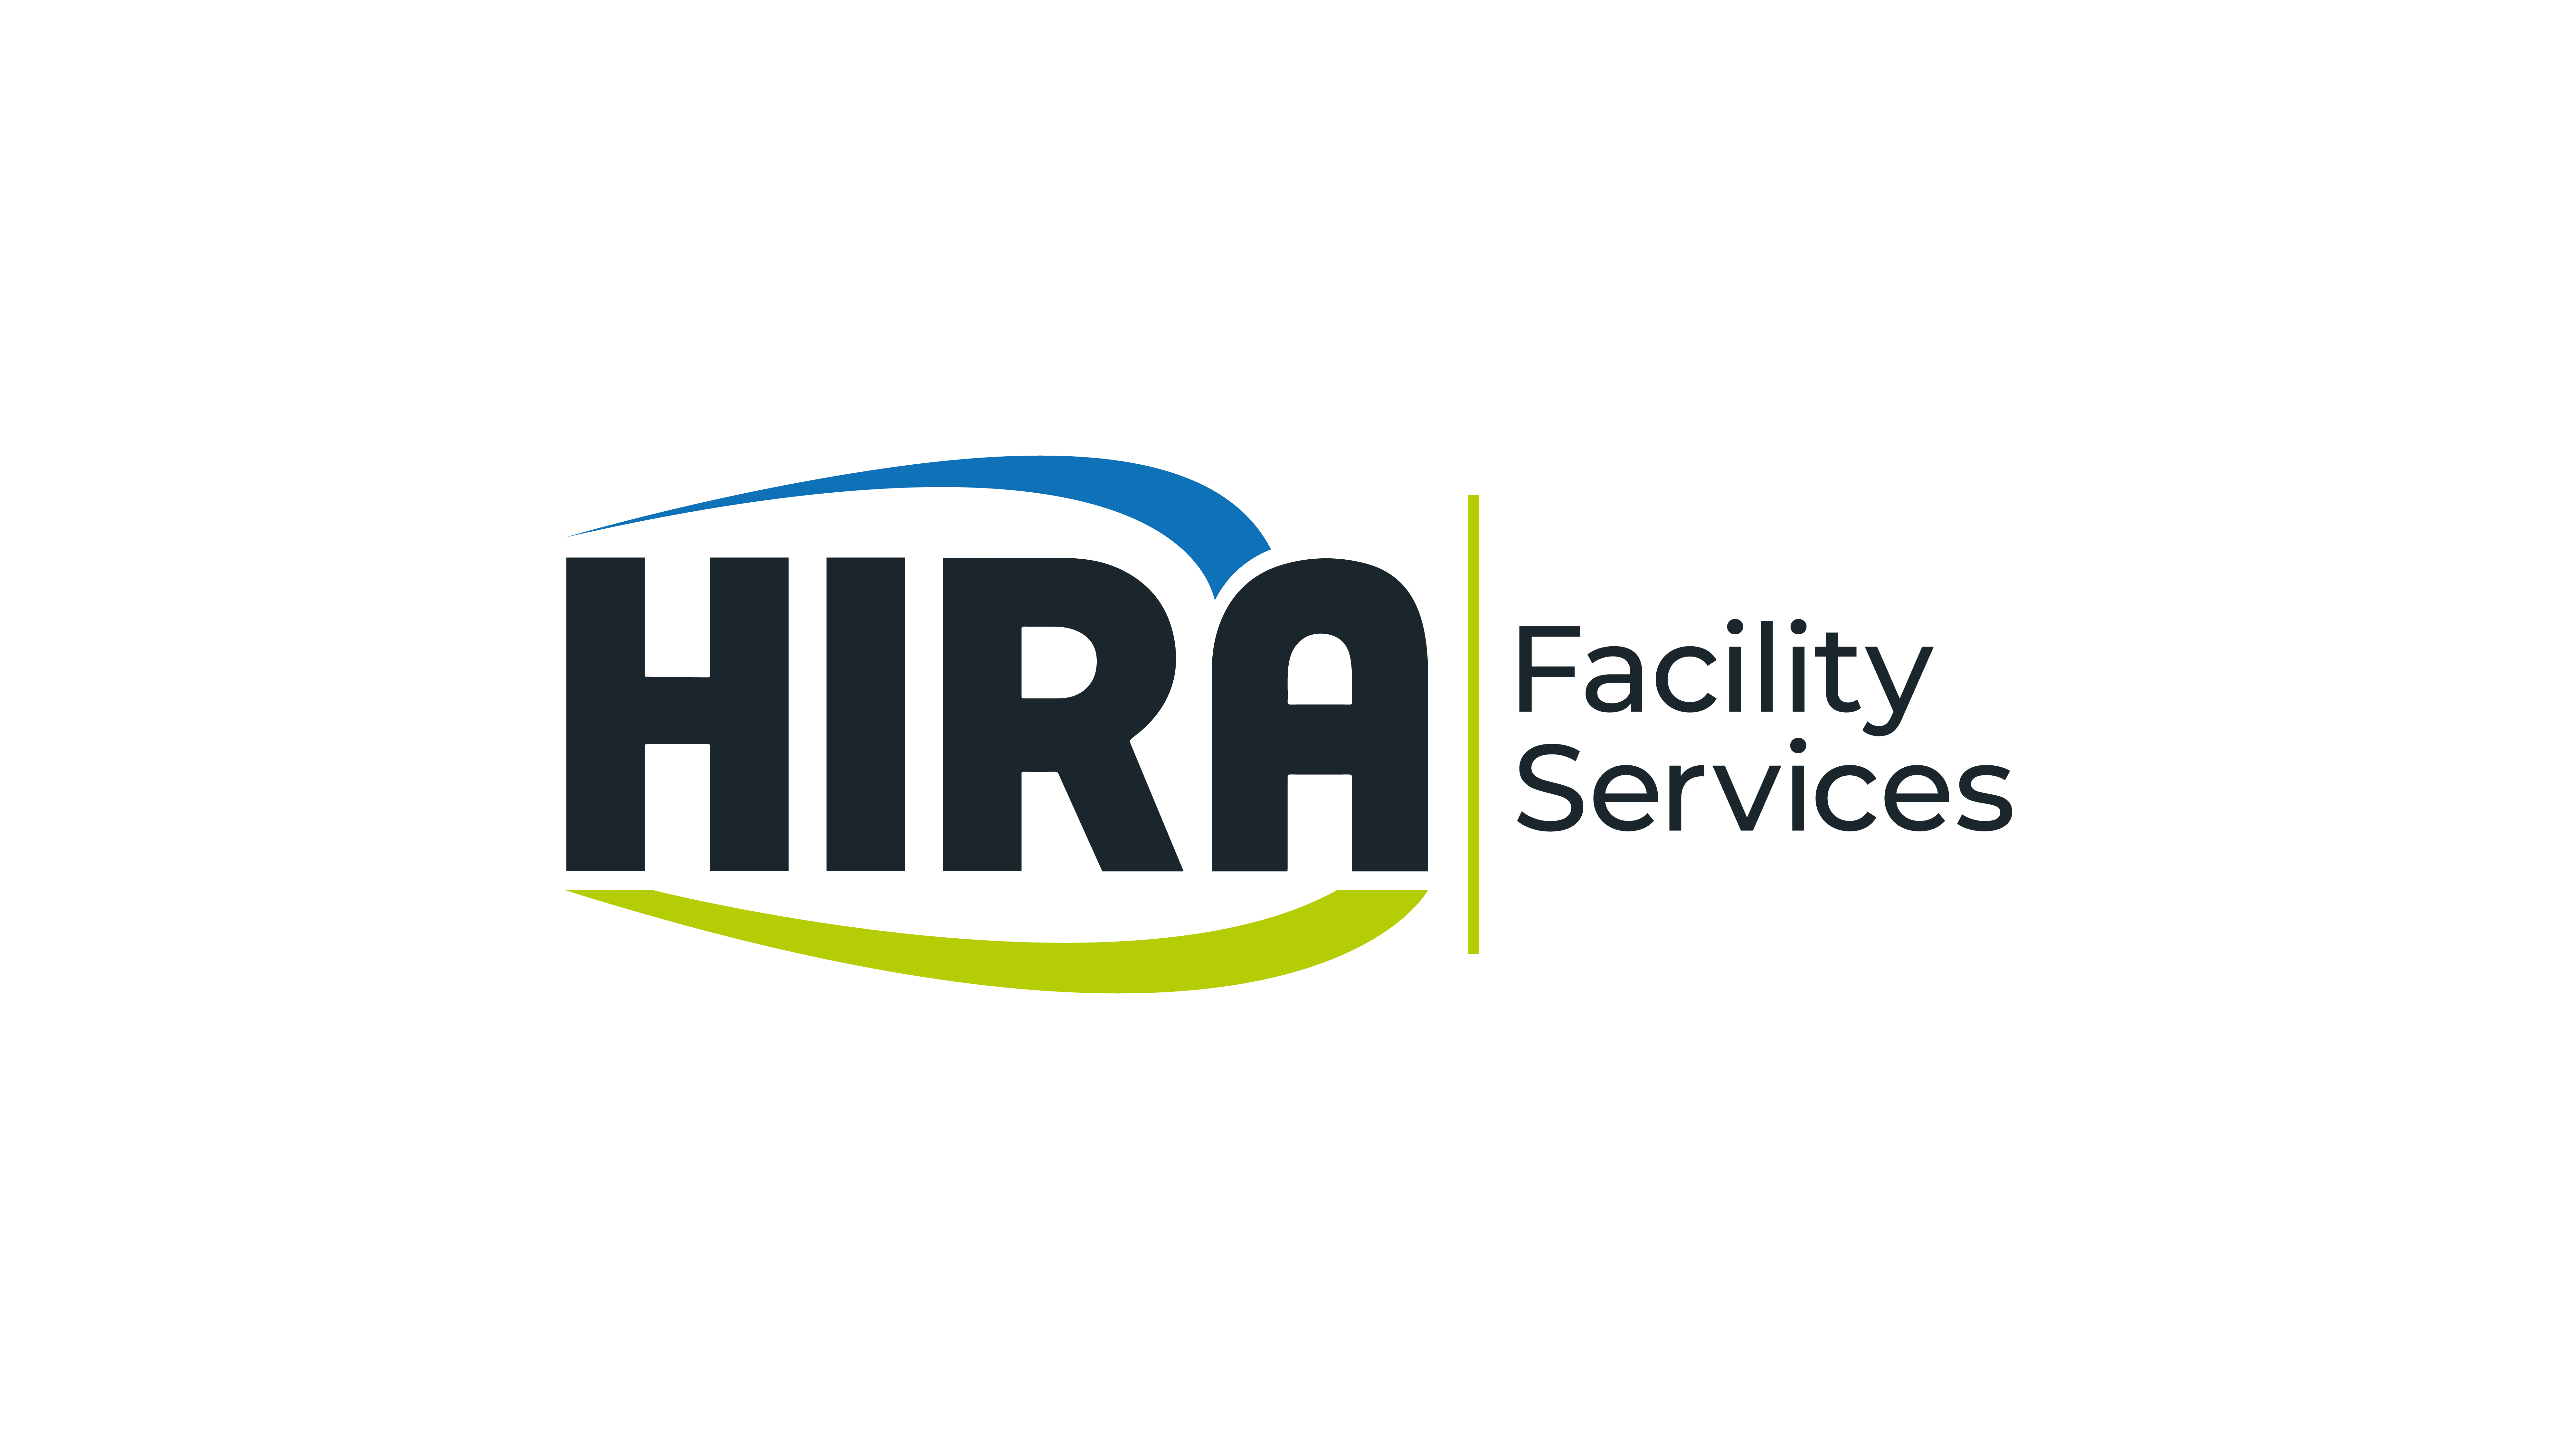 HIRA Service GmbH